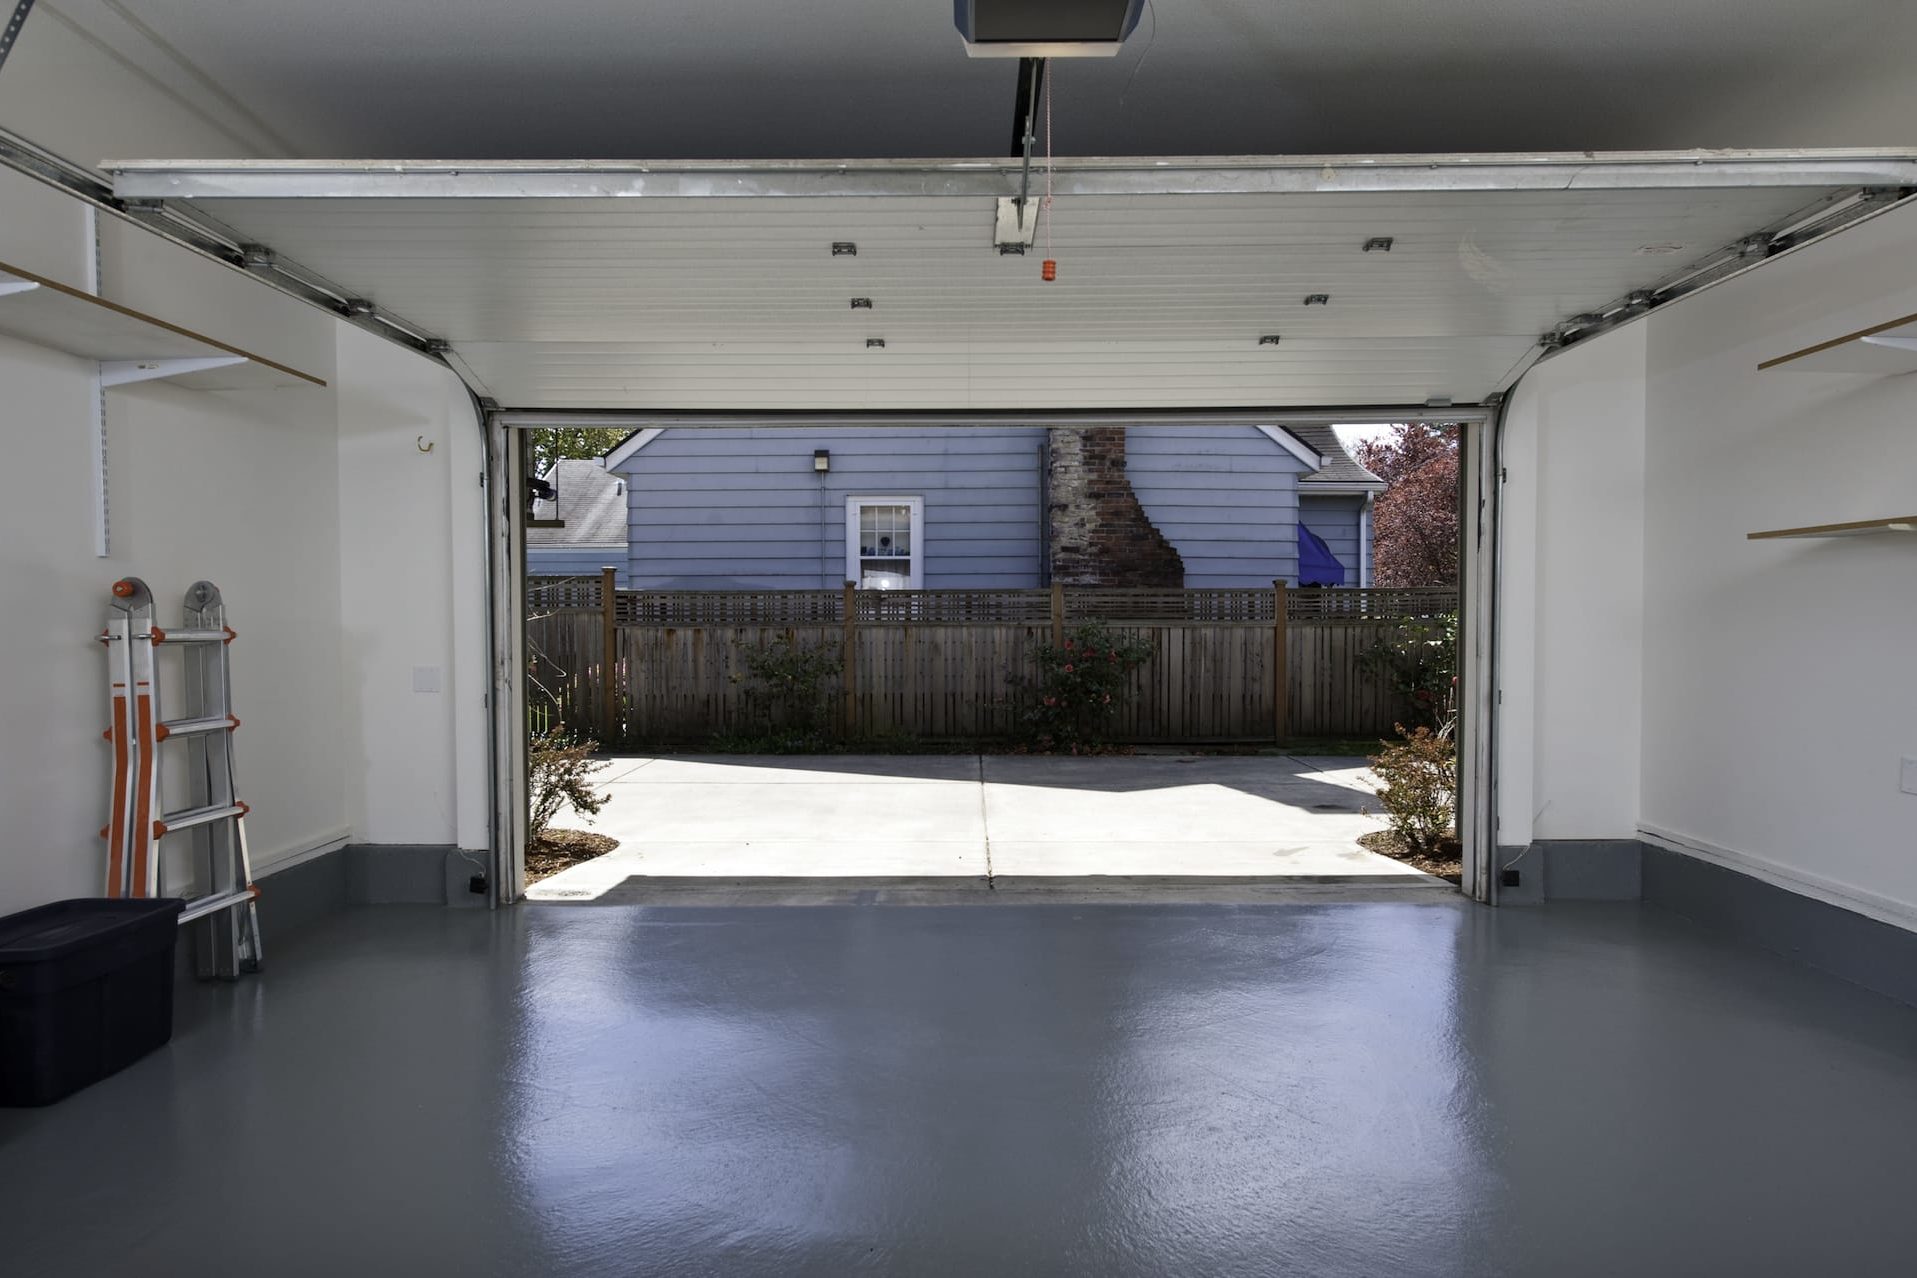 How To Paint A Garage Floor